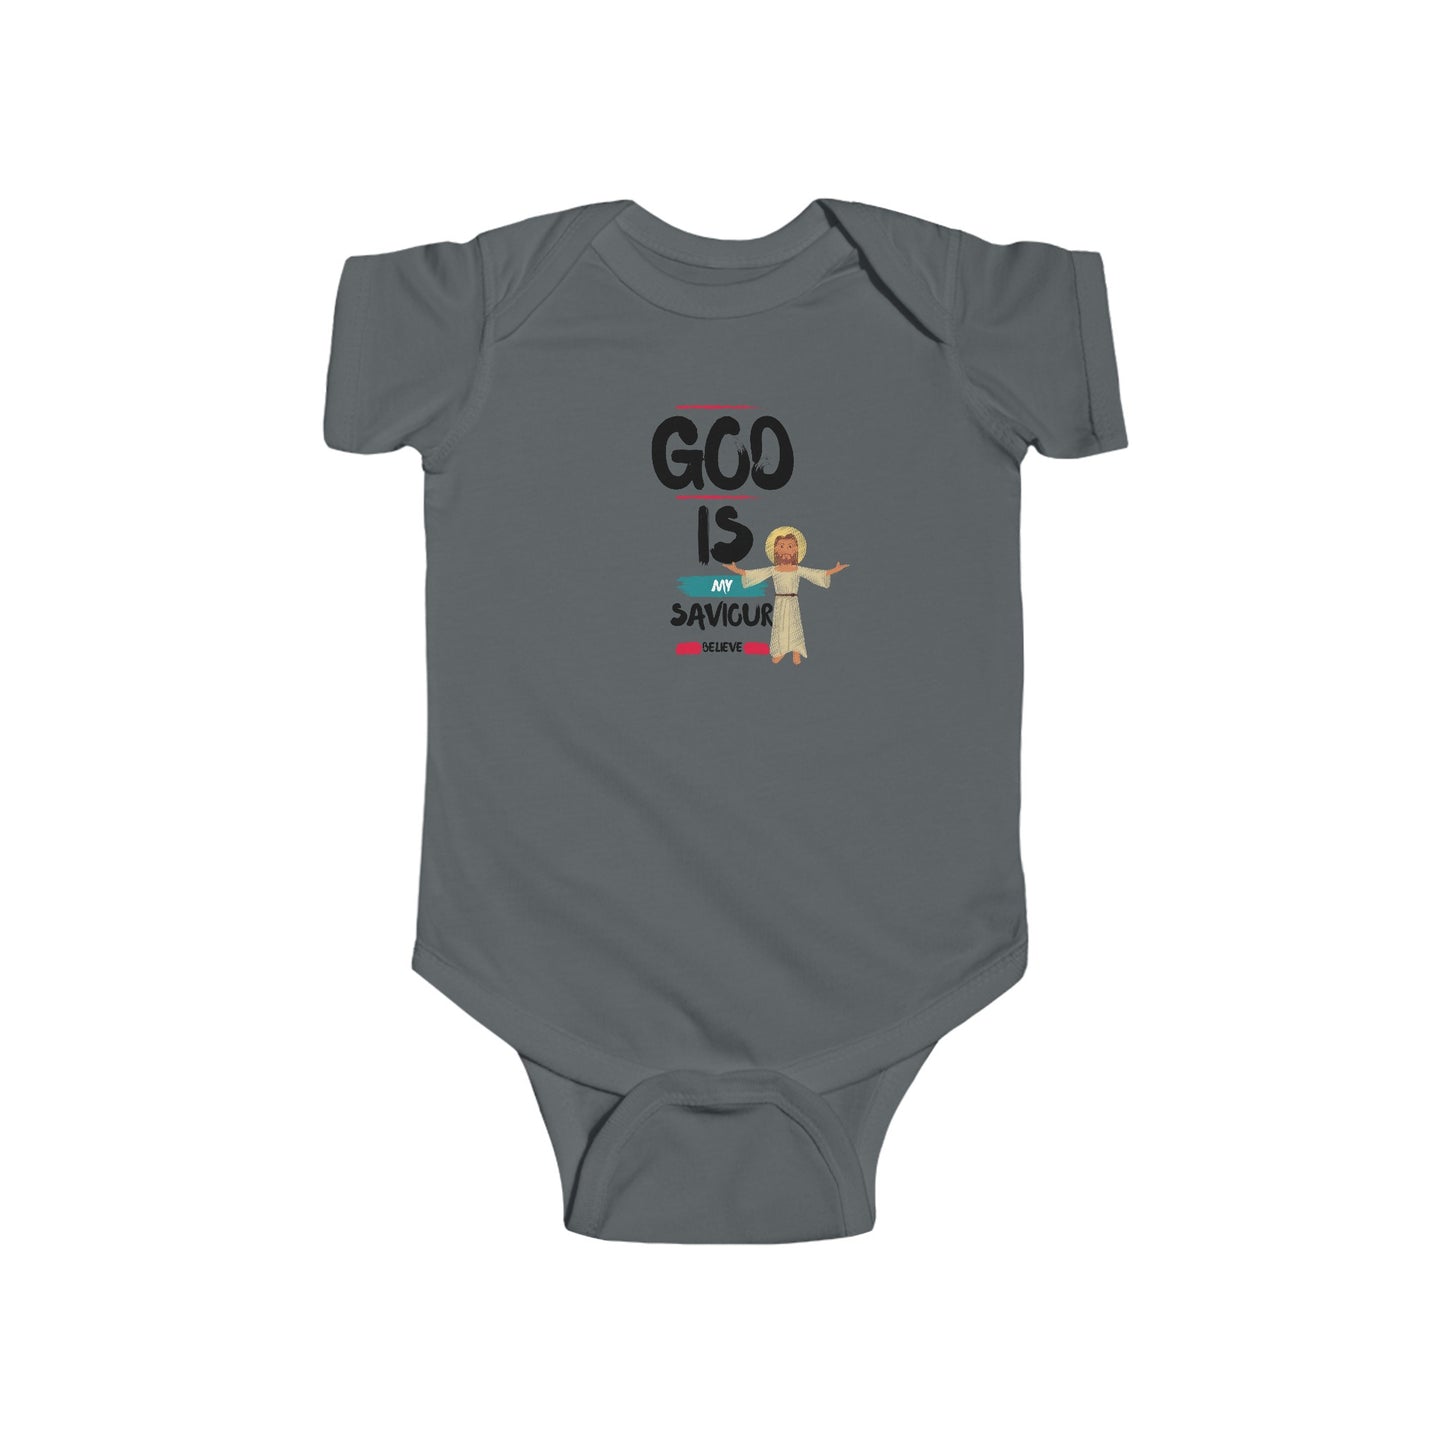 God is my saviour-  Unisex Infant Jersey Bodysuit